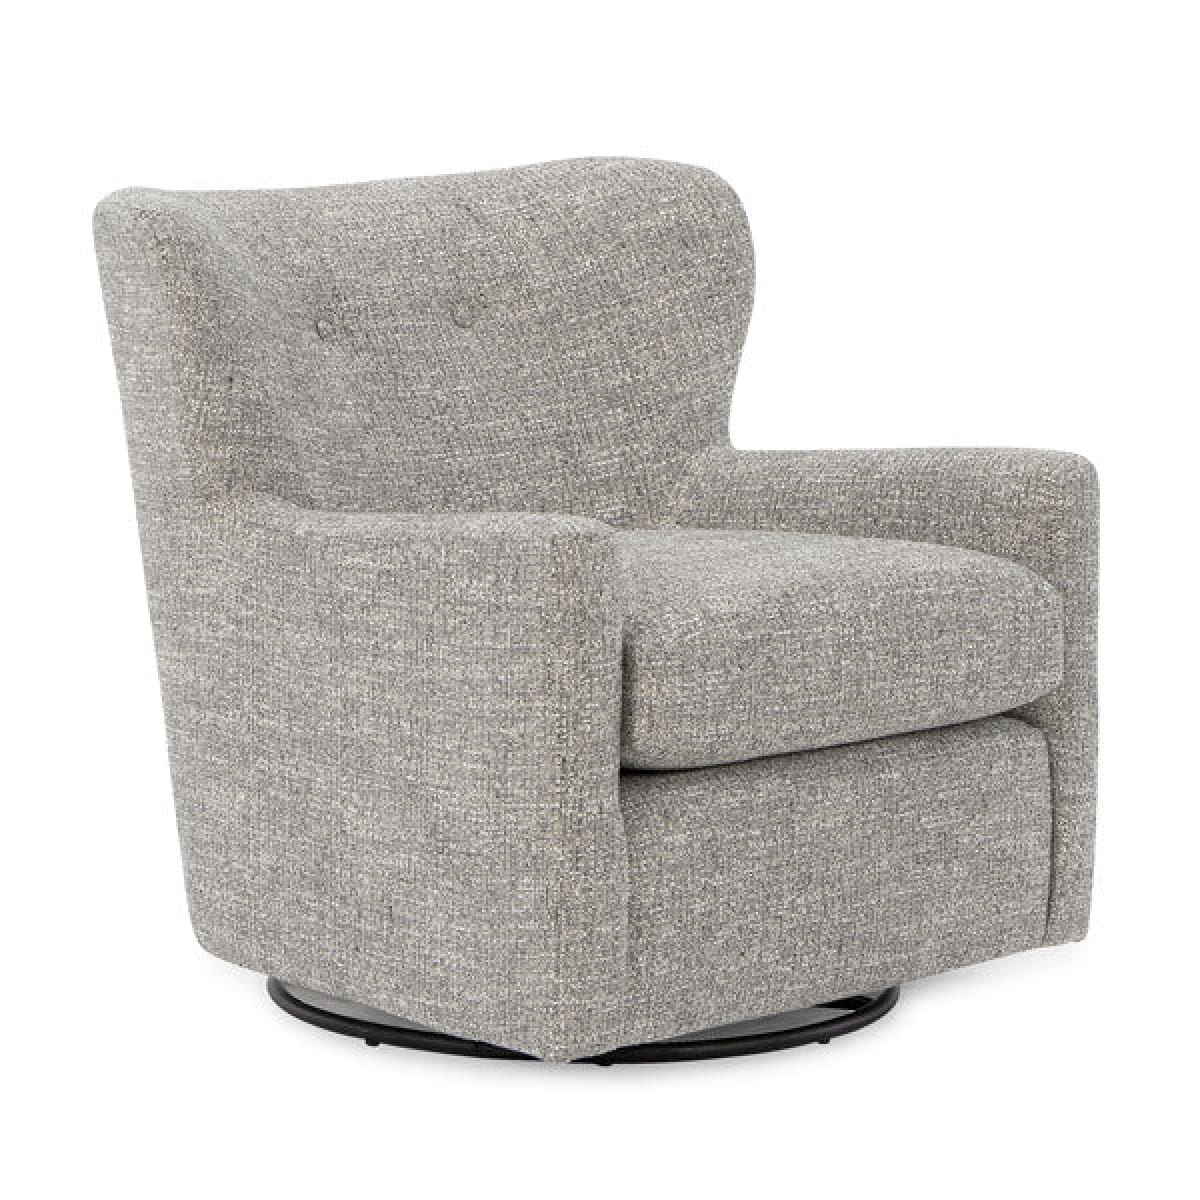 Furniture Barn - Casimere Swivel Accent Chair